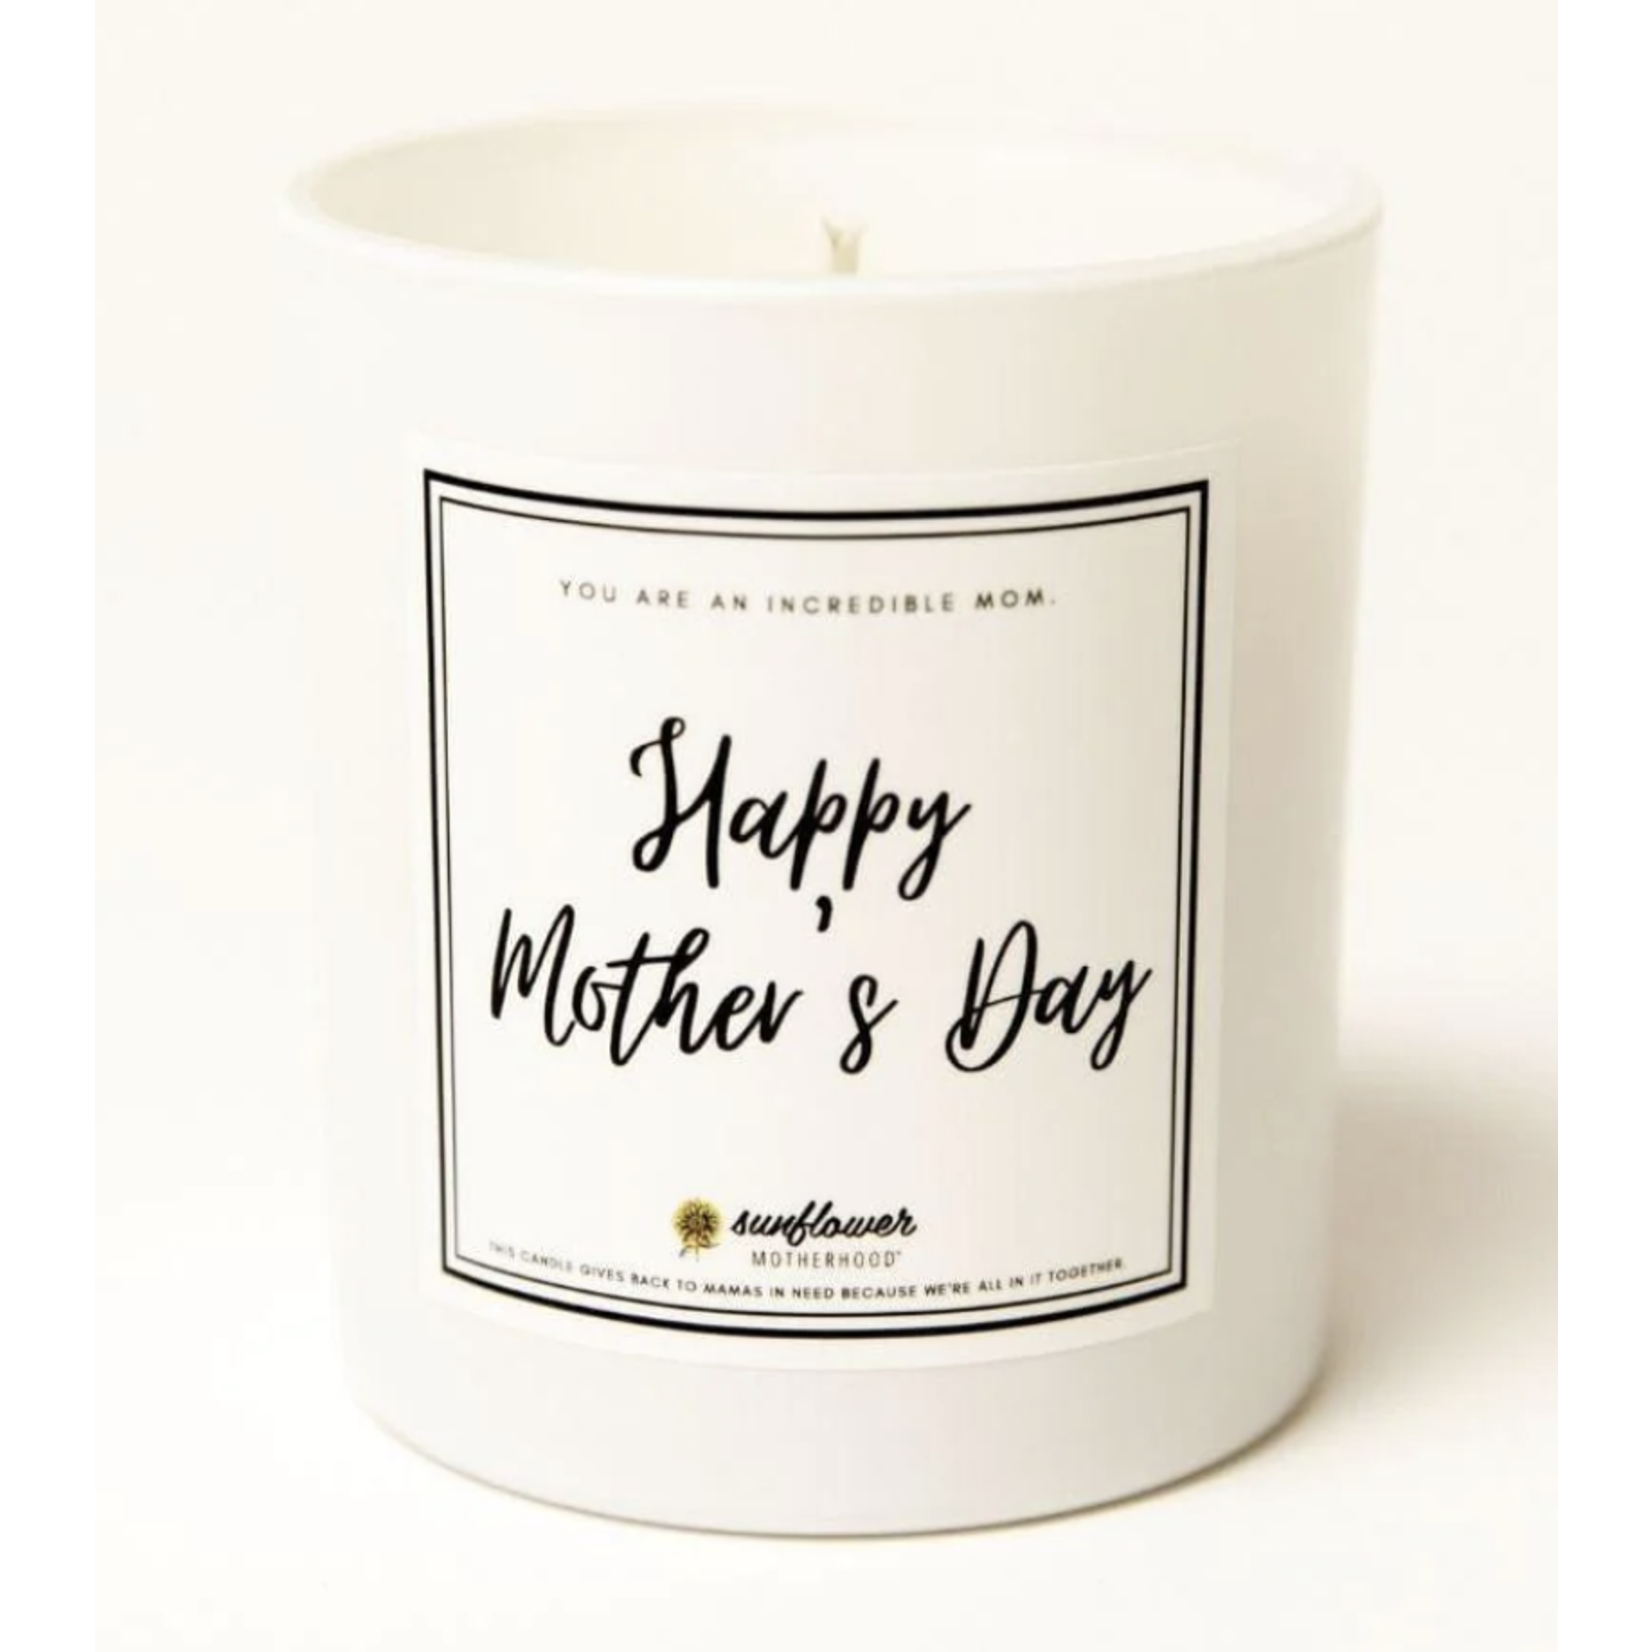 https://cdn.shoplightspeed.com/shops/653276/files/53924410/1652x1652x2/sunflower-motherhood-happy-mothers-day-candle.jpg